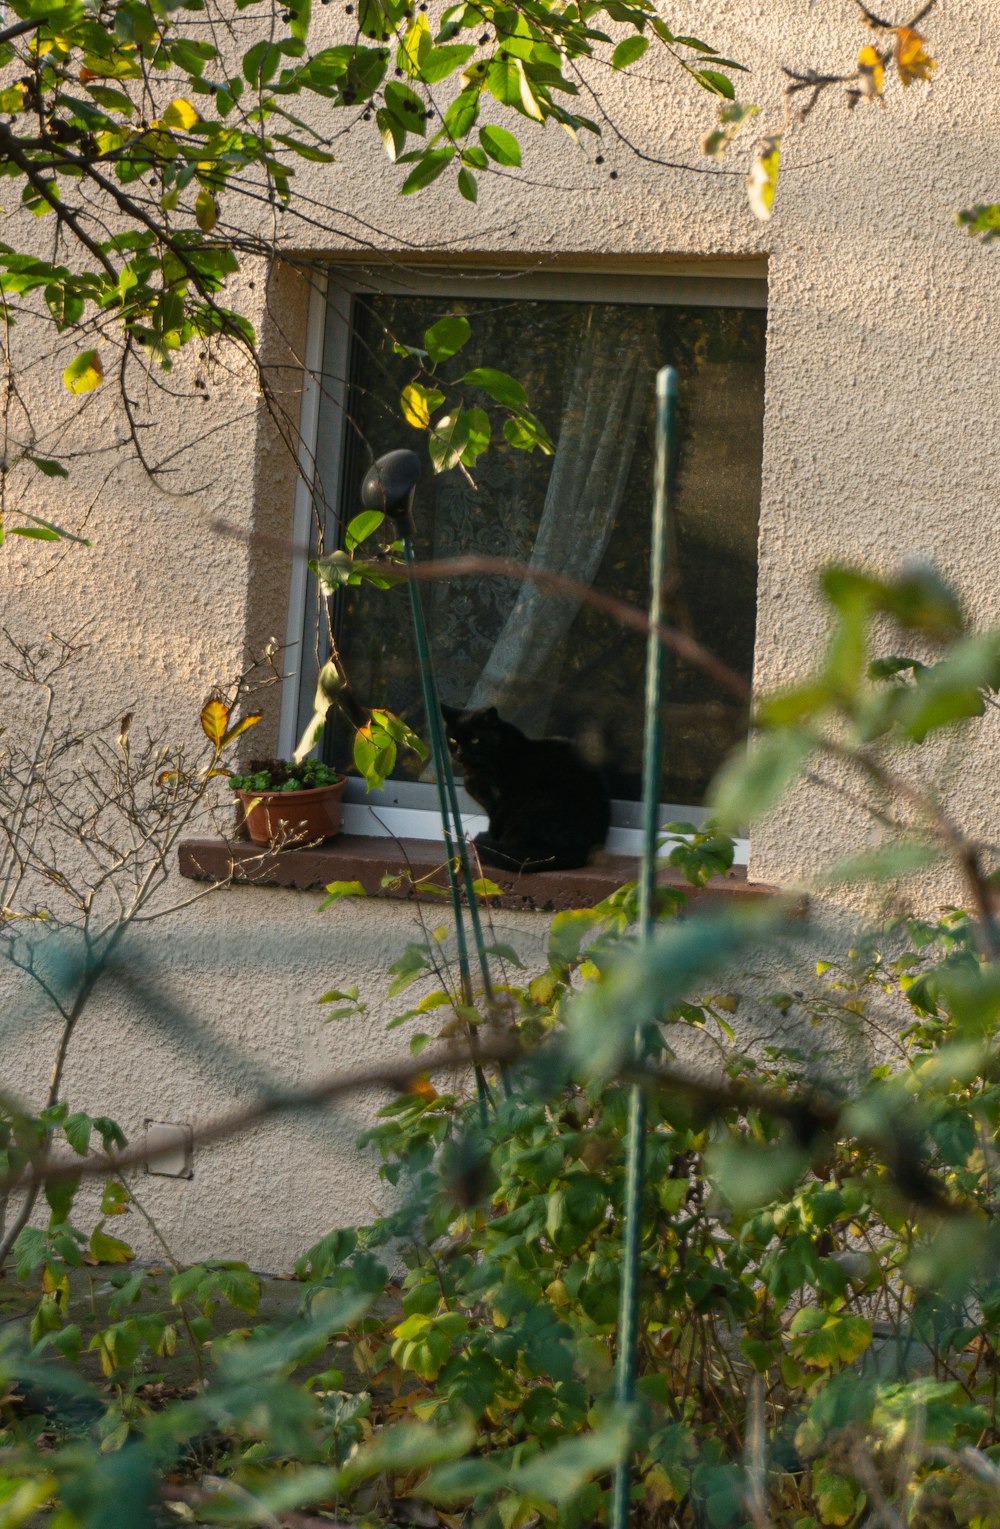 a cat sitting in a window sill